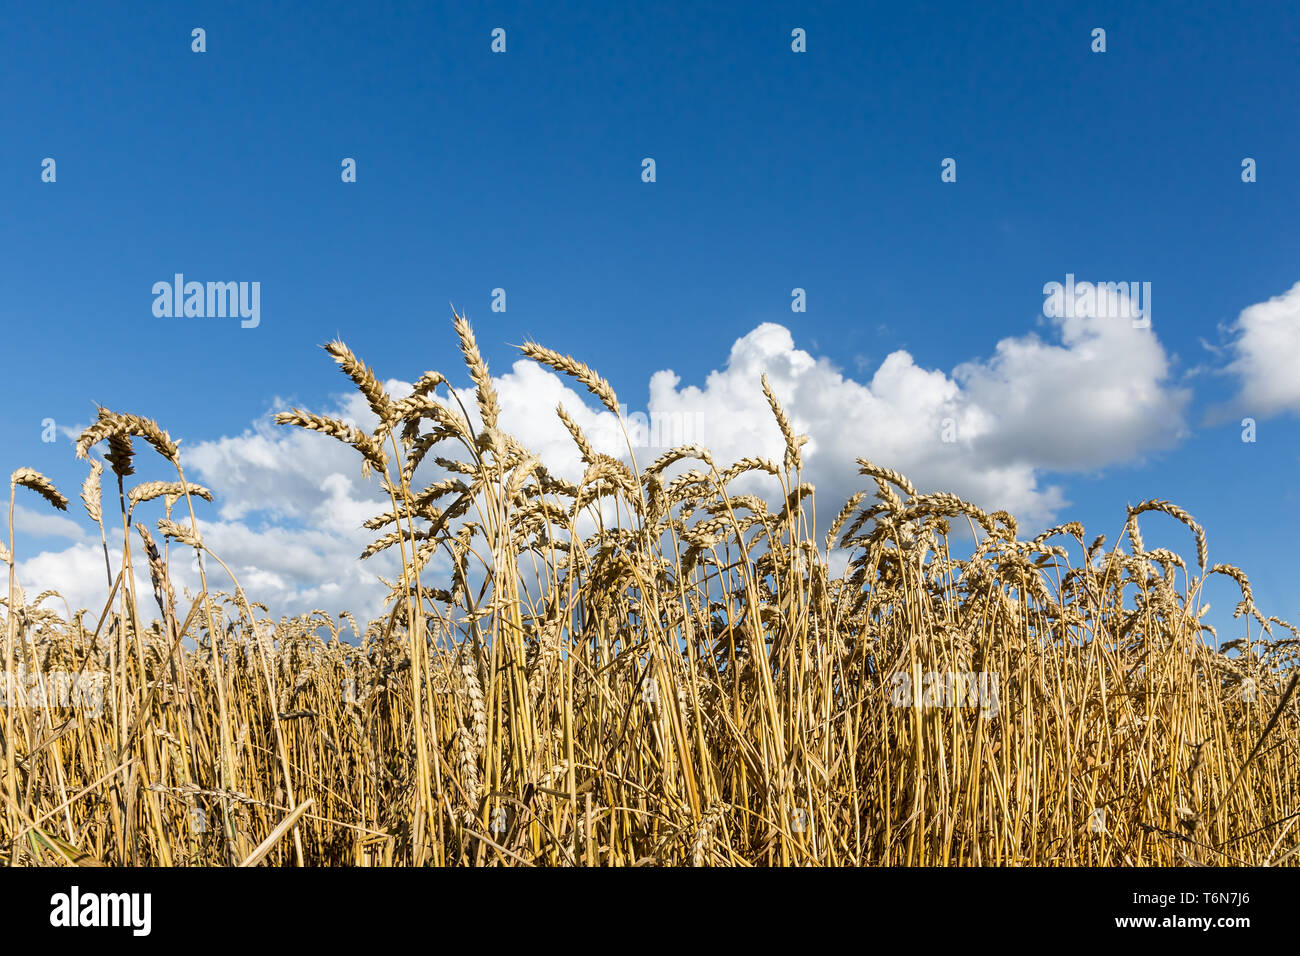 Golden, ripe wheat against blue sky background. Stock Photo